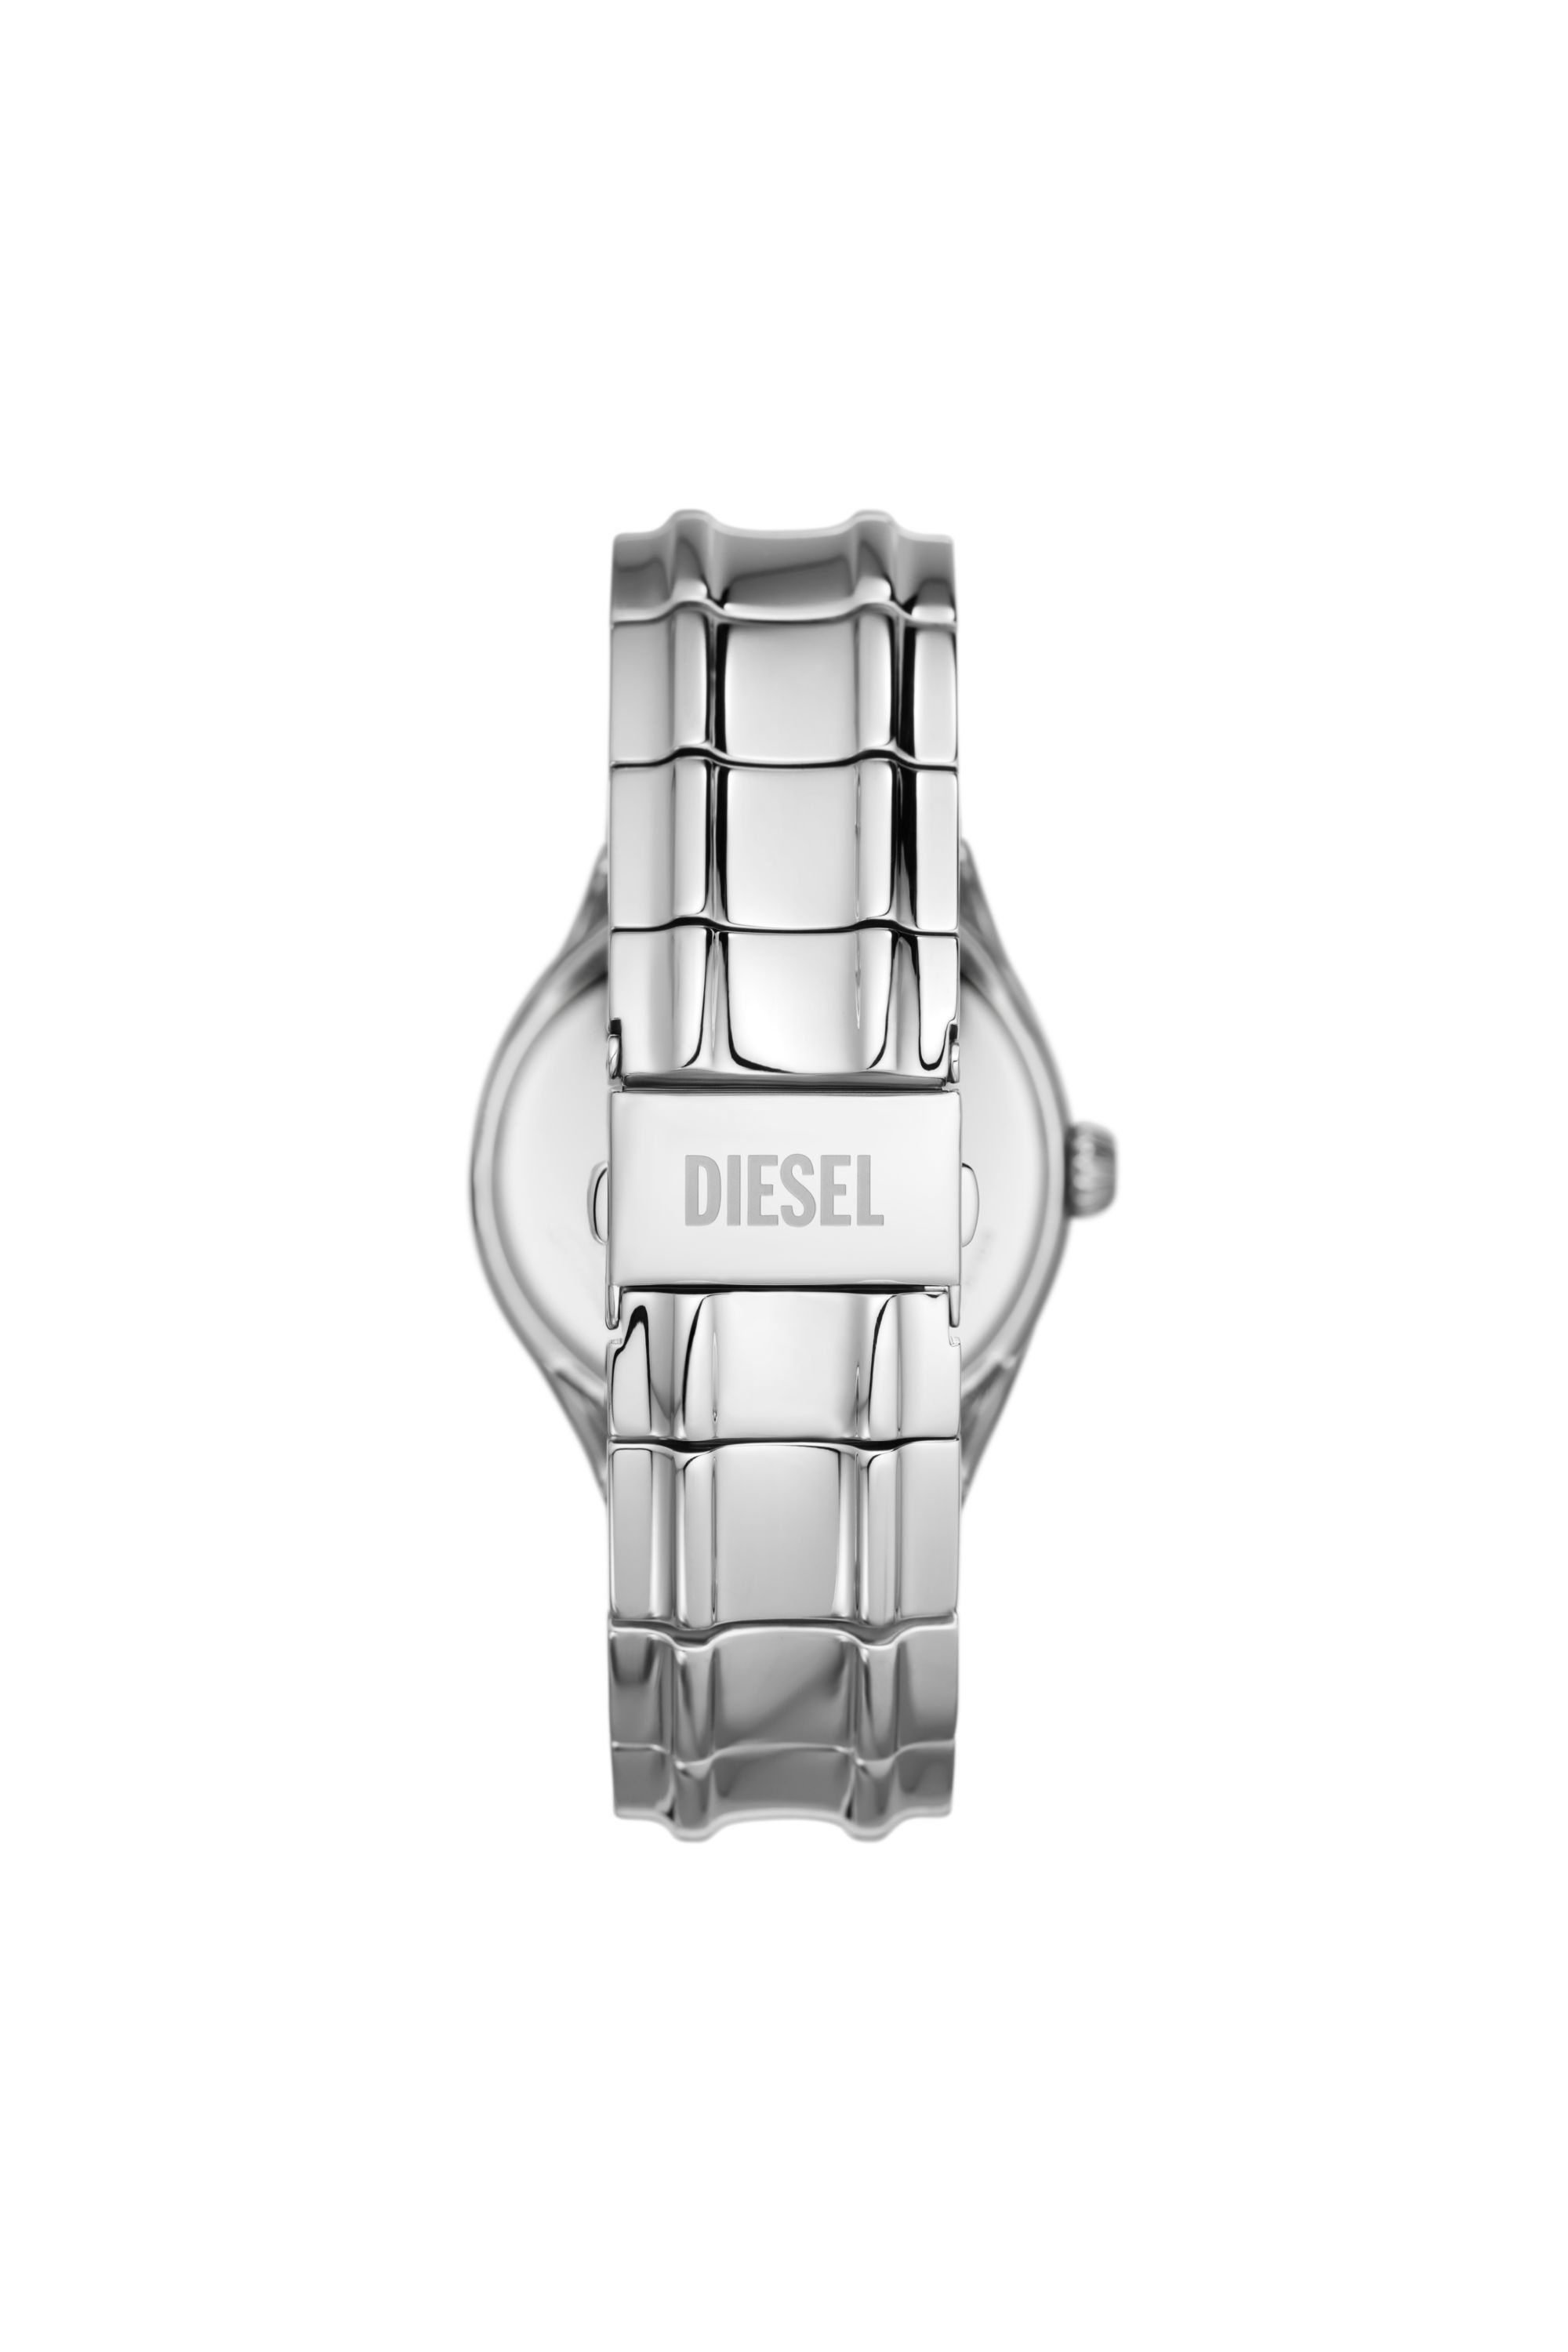 Diesel - DZ2205 WATCH, Uomo Orologio Streamline in acciaio inossidabile con tre lancette in Argento - Image 2